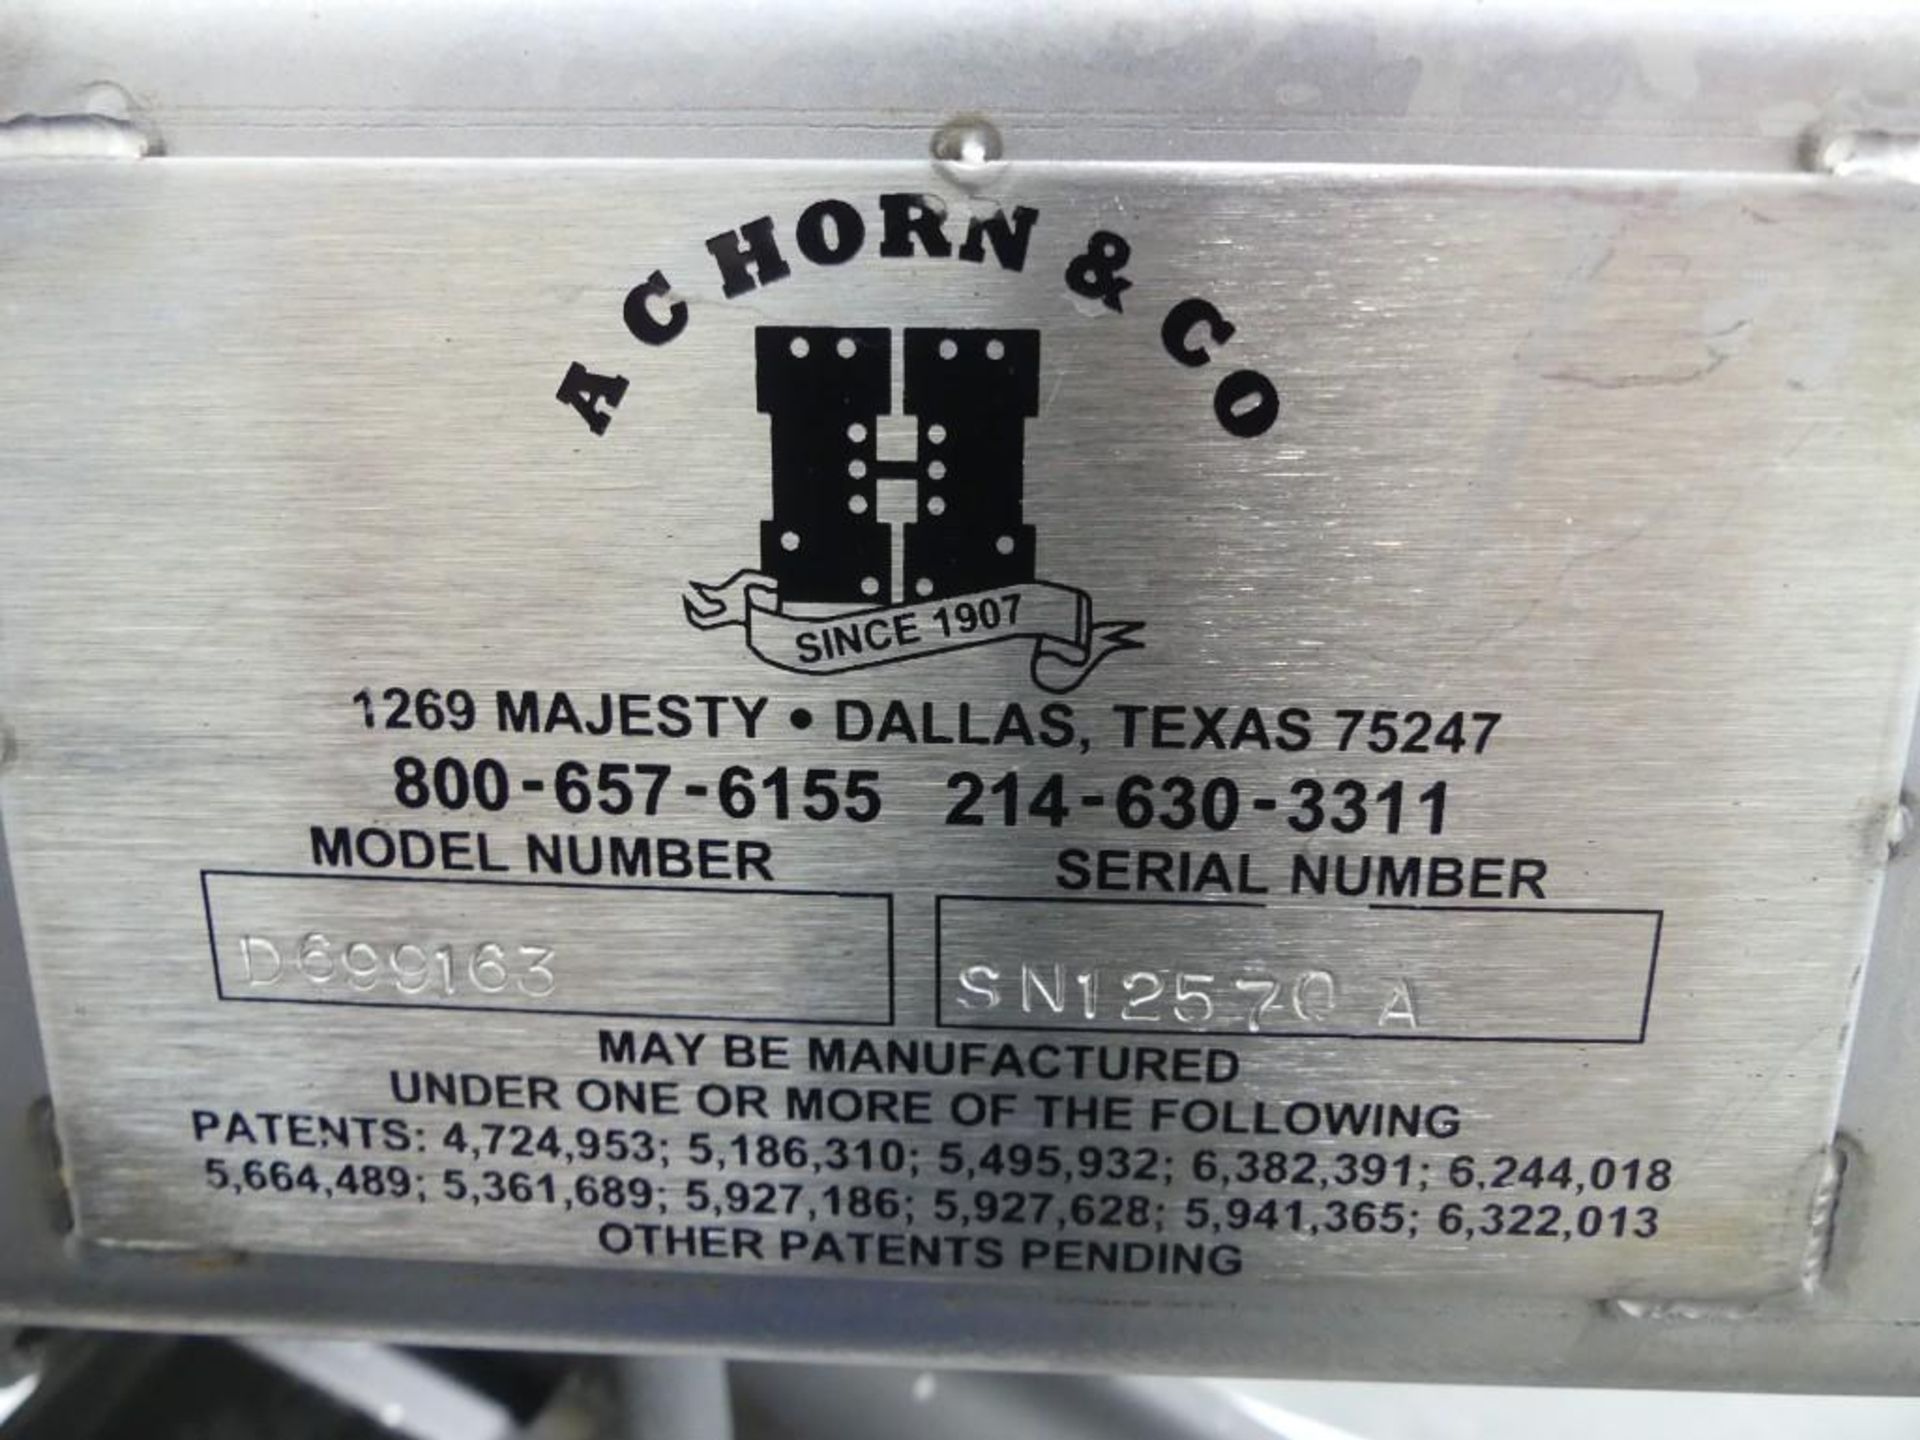 AC Horn D699163 10" Wide Belt Incline Conveyor - Image 11 of 11